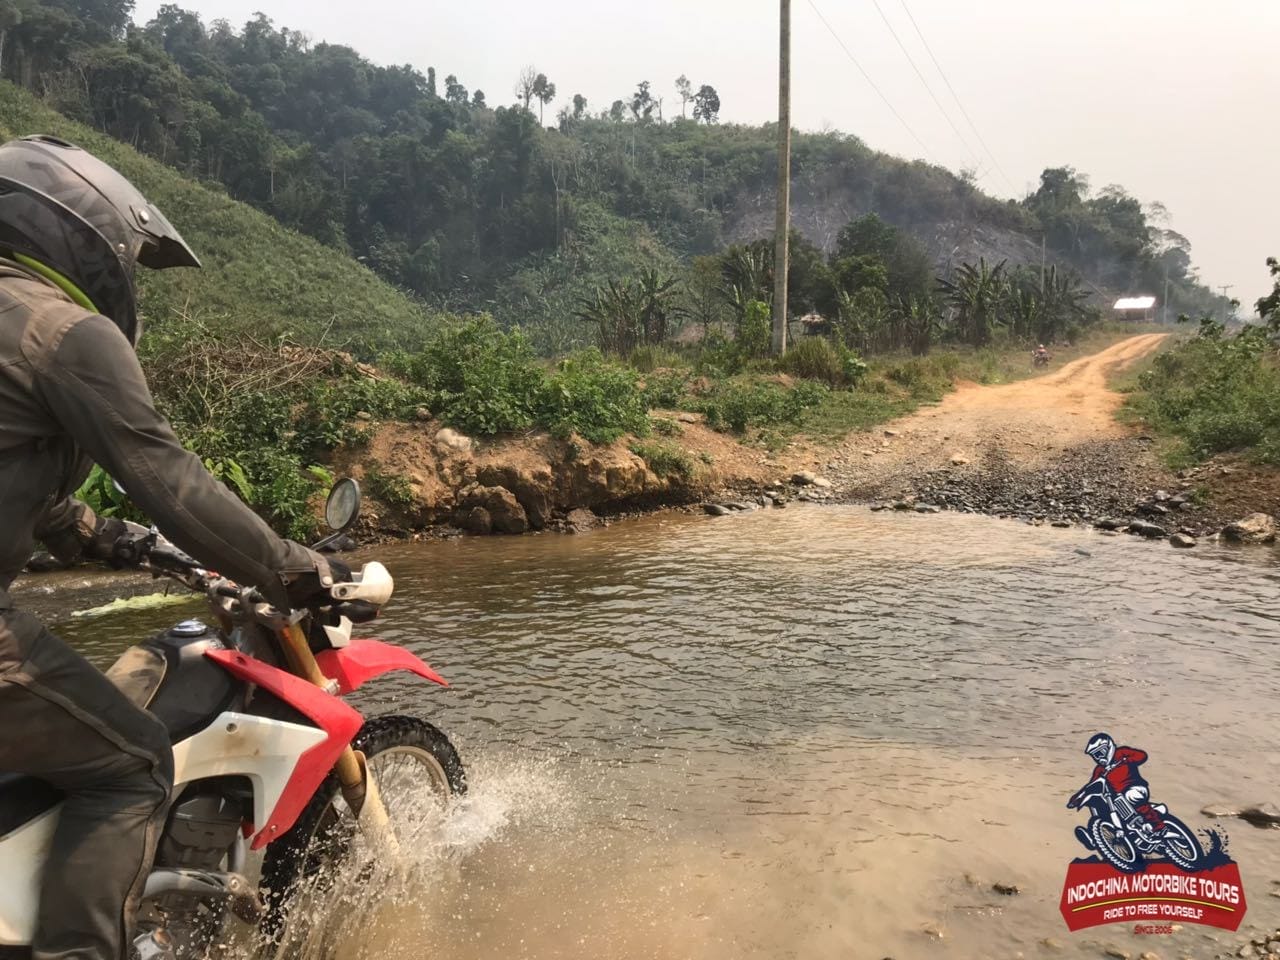 Laos Motorbike Tours to Vietnam 38 - Remarkable Laos Off-road Motorcycle Tour Through Mountain Ridges, Local Villages